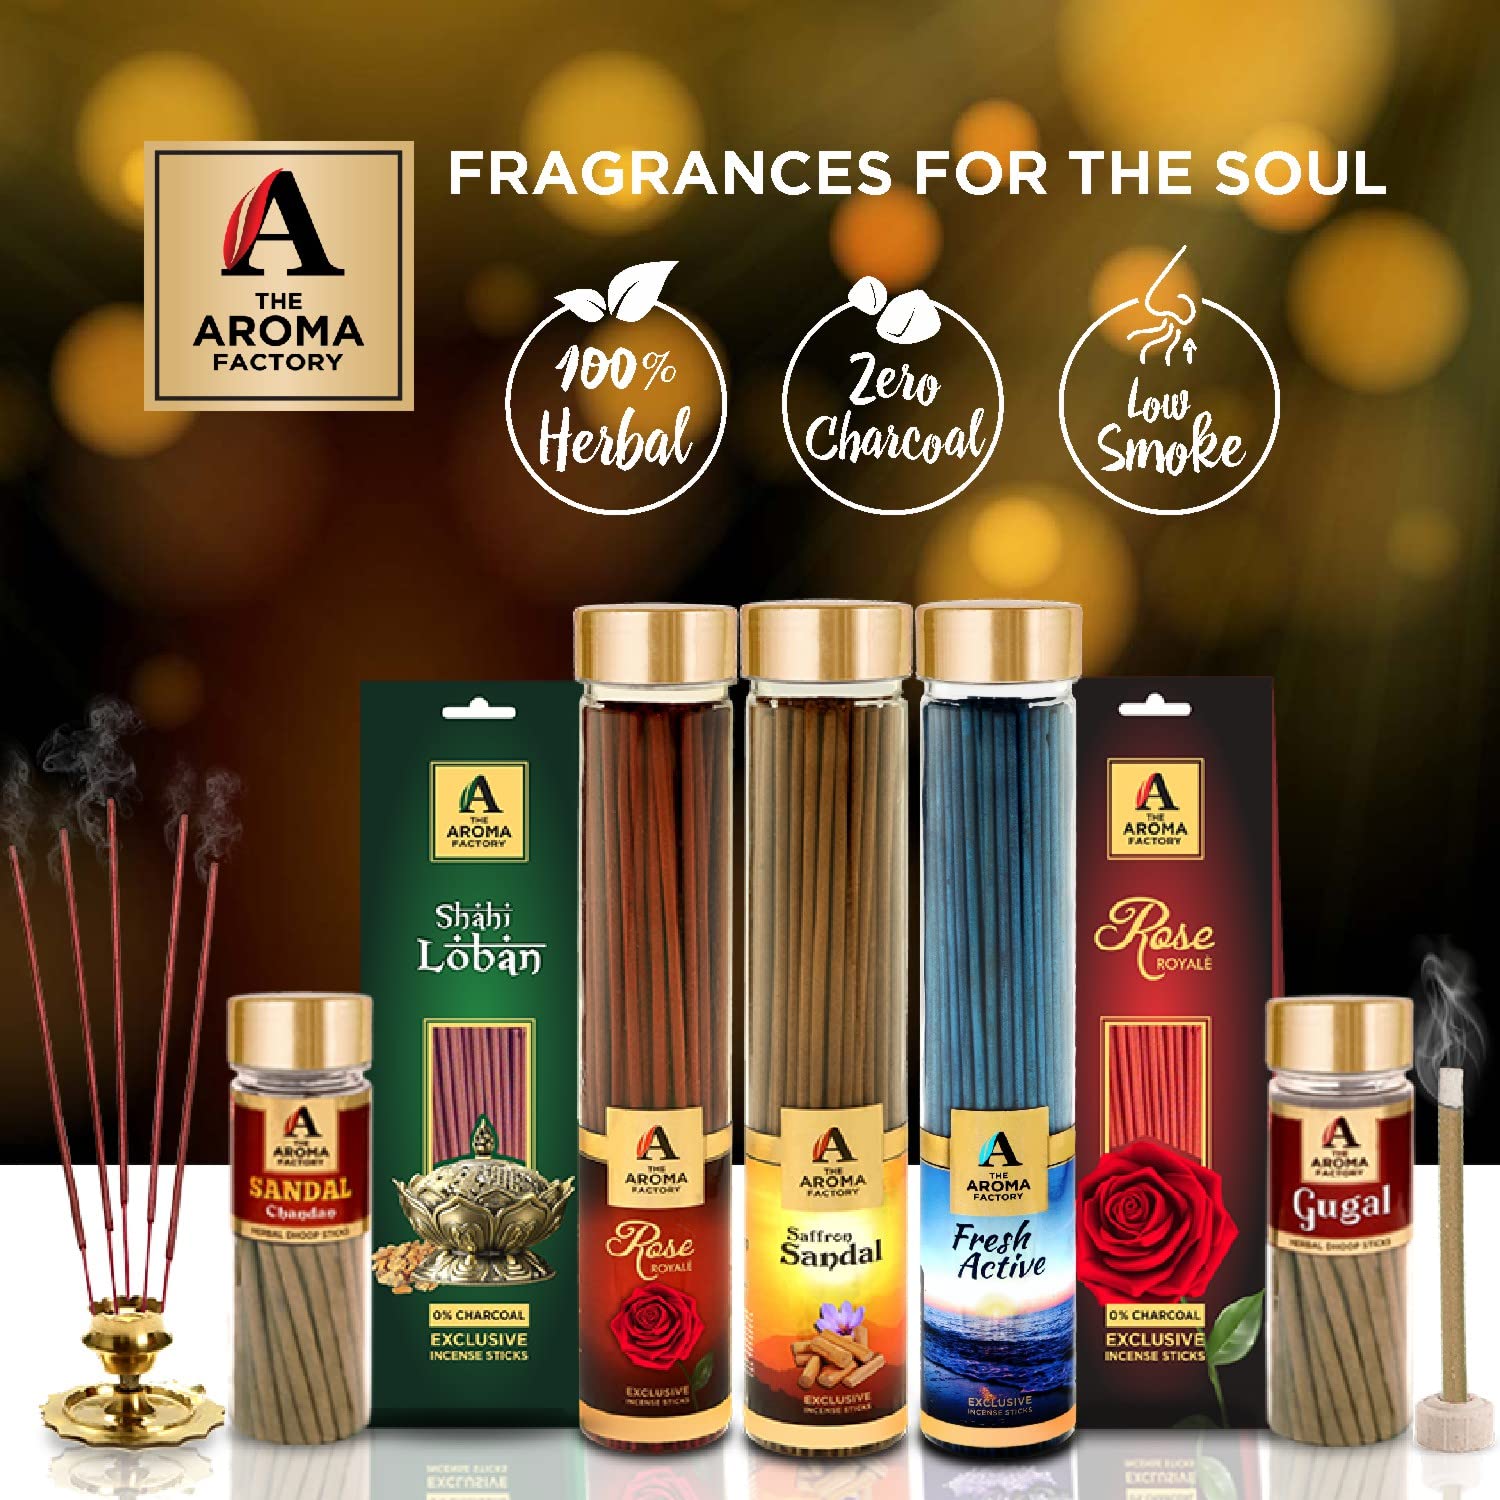 The Aroma Factory Durga Agarbatti for Pooja, Luxury Incense Sticks, Low Smoke & Zero Charcoal (Bottle Pack of 1, 100g)